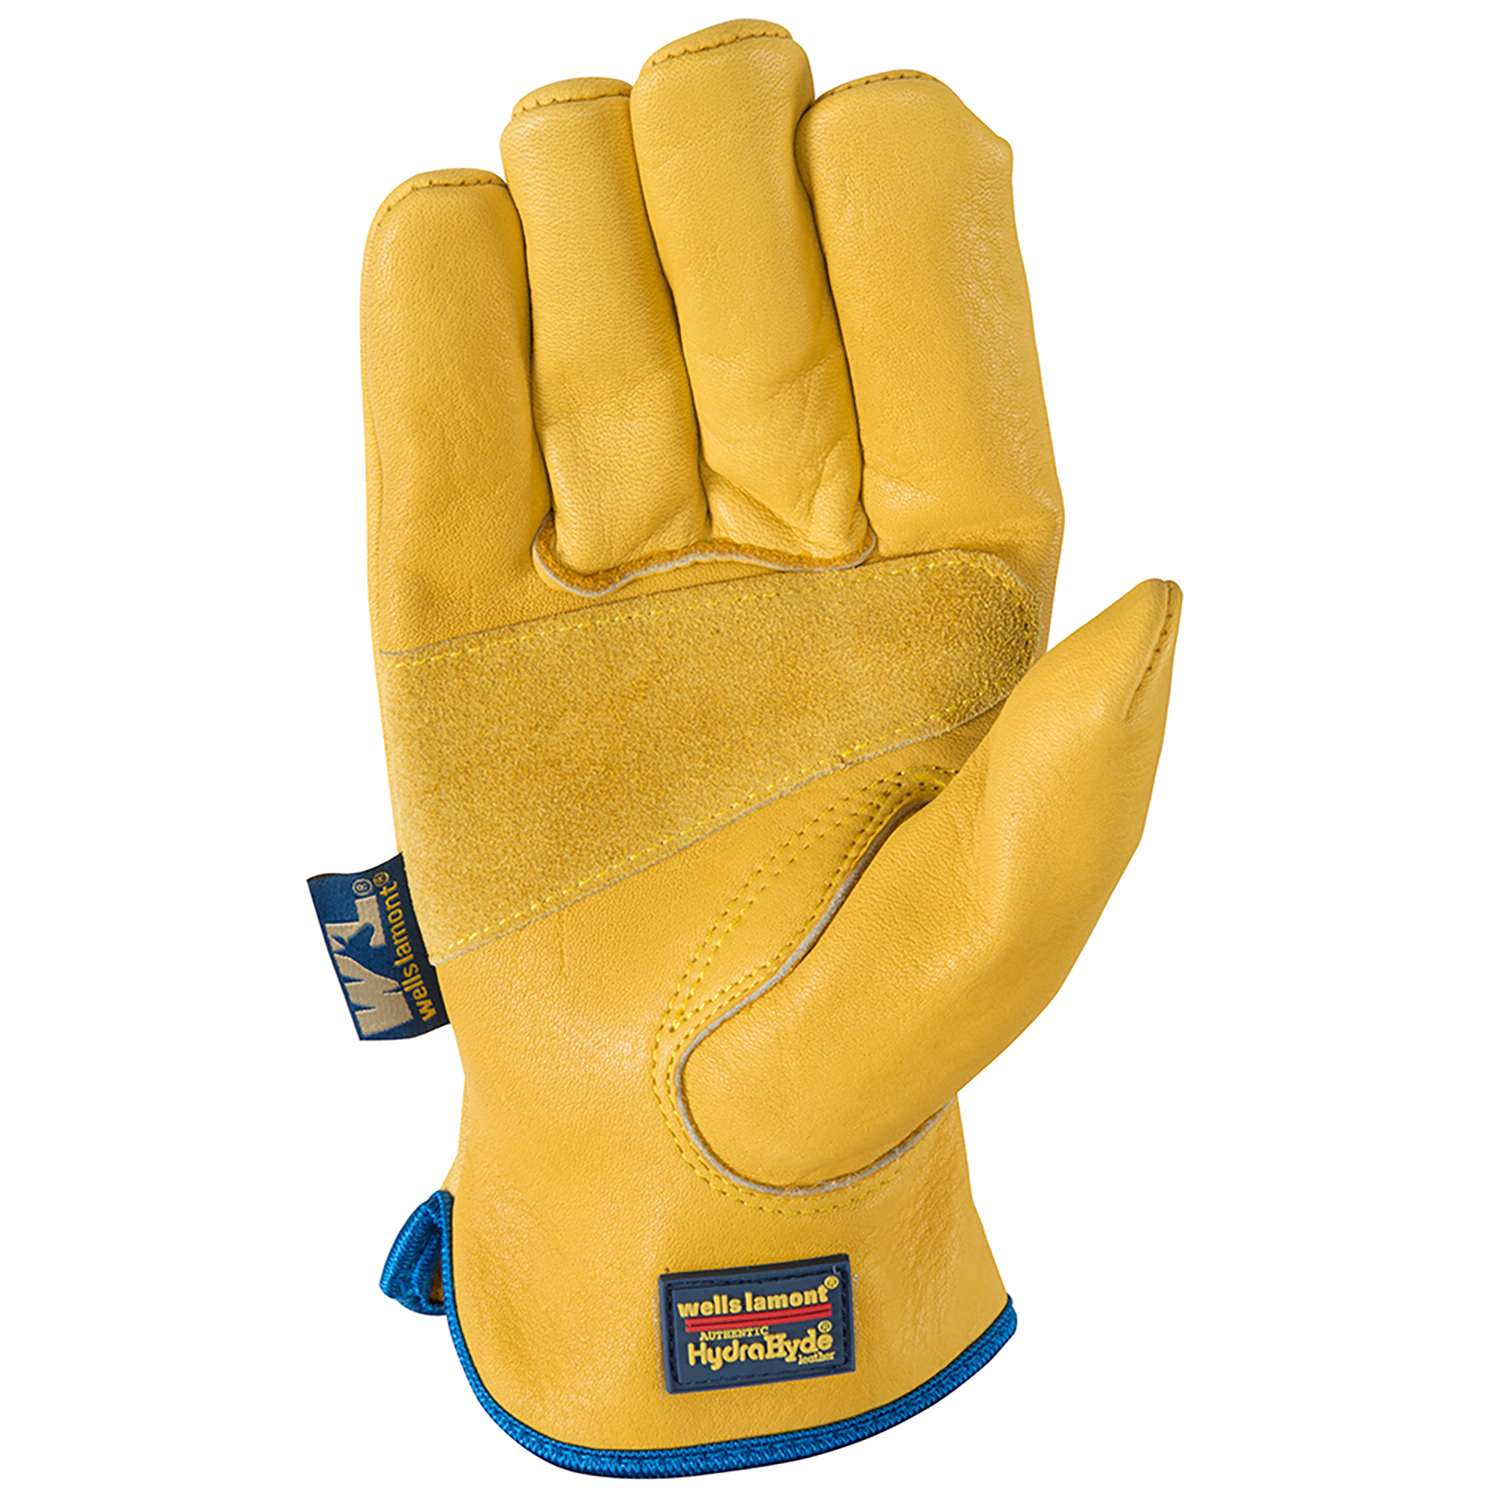 Wells Lamont mens Work Gloves, Tan, Medium Pack of 1 US